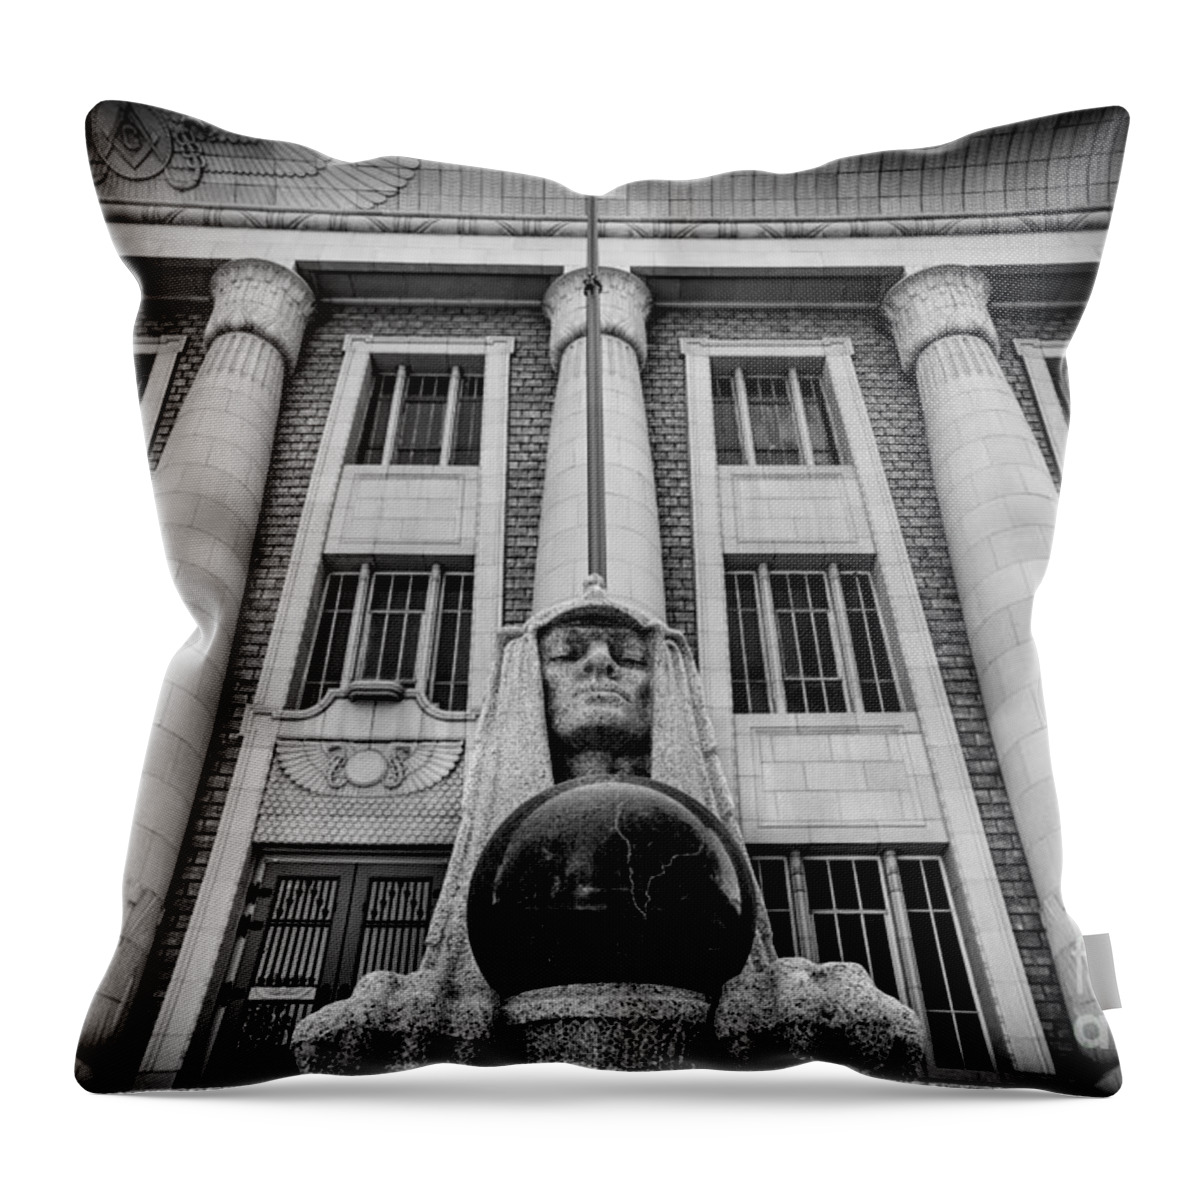 Salt Lake Throw Pillow featuring the photograph Salt Lake City Masonic Temple Sphinx by Gary Whitton